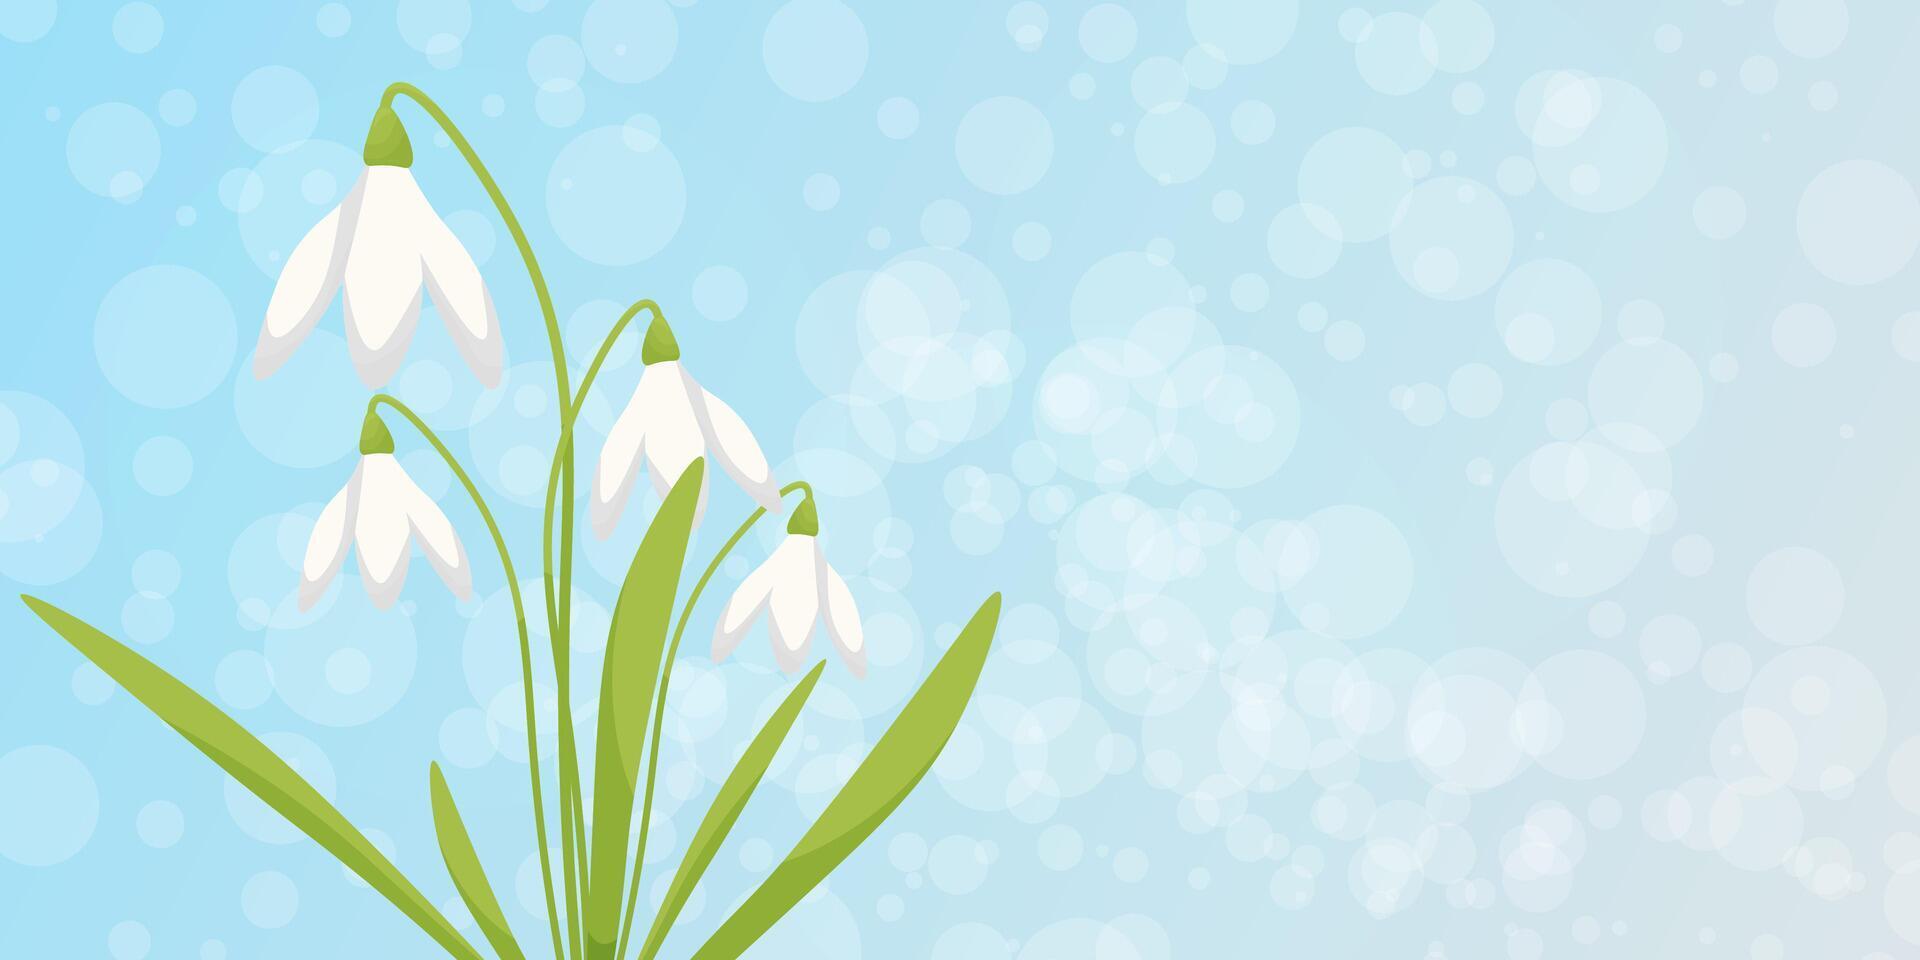 primero primavera flores campanillas en un azul antecedentes ,lugar para texto. vector tarjeta postal